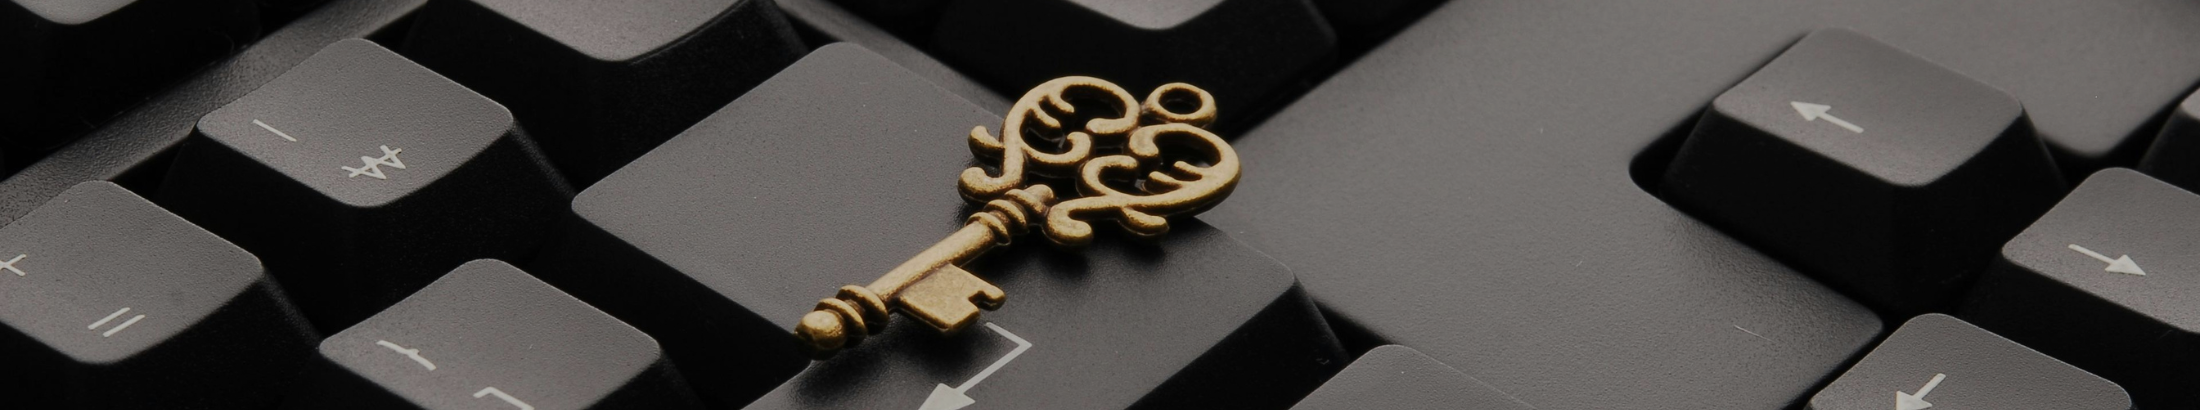 A  door key resting on the Enter key of a black keyboard.